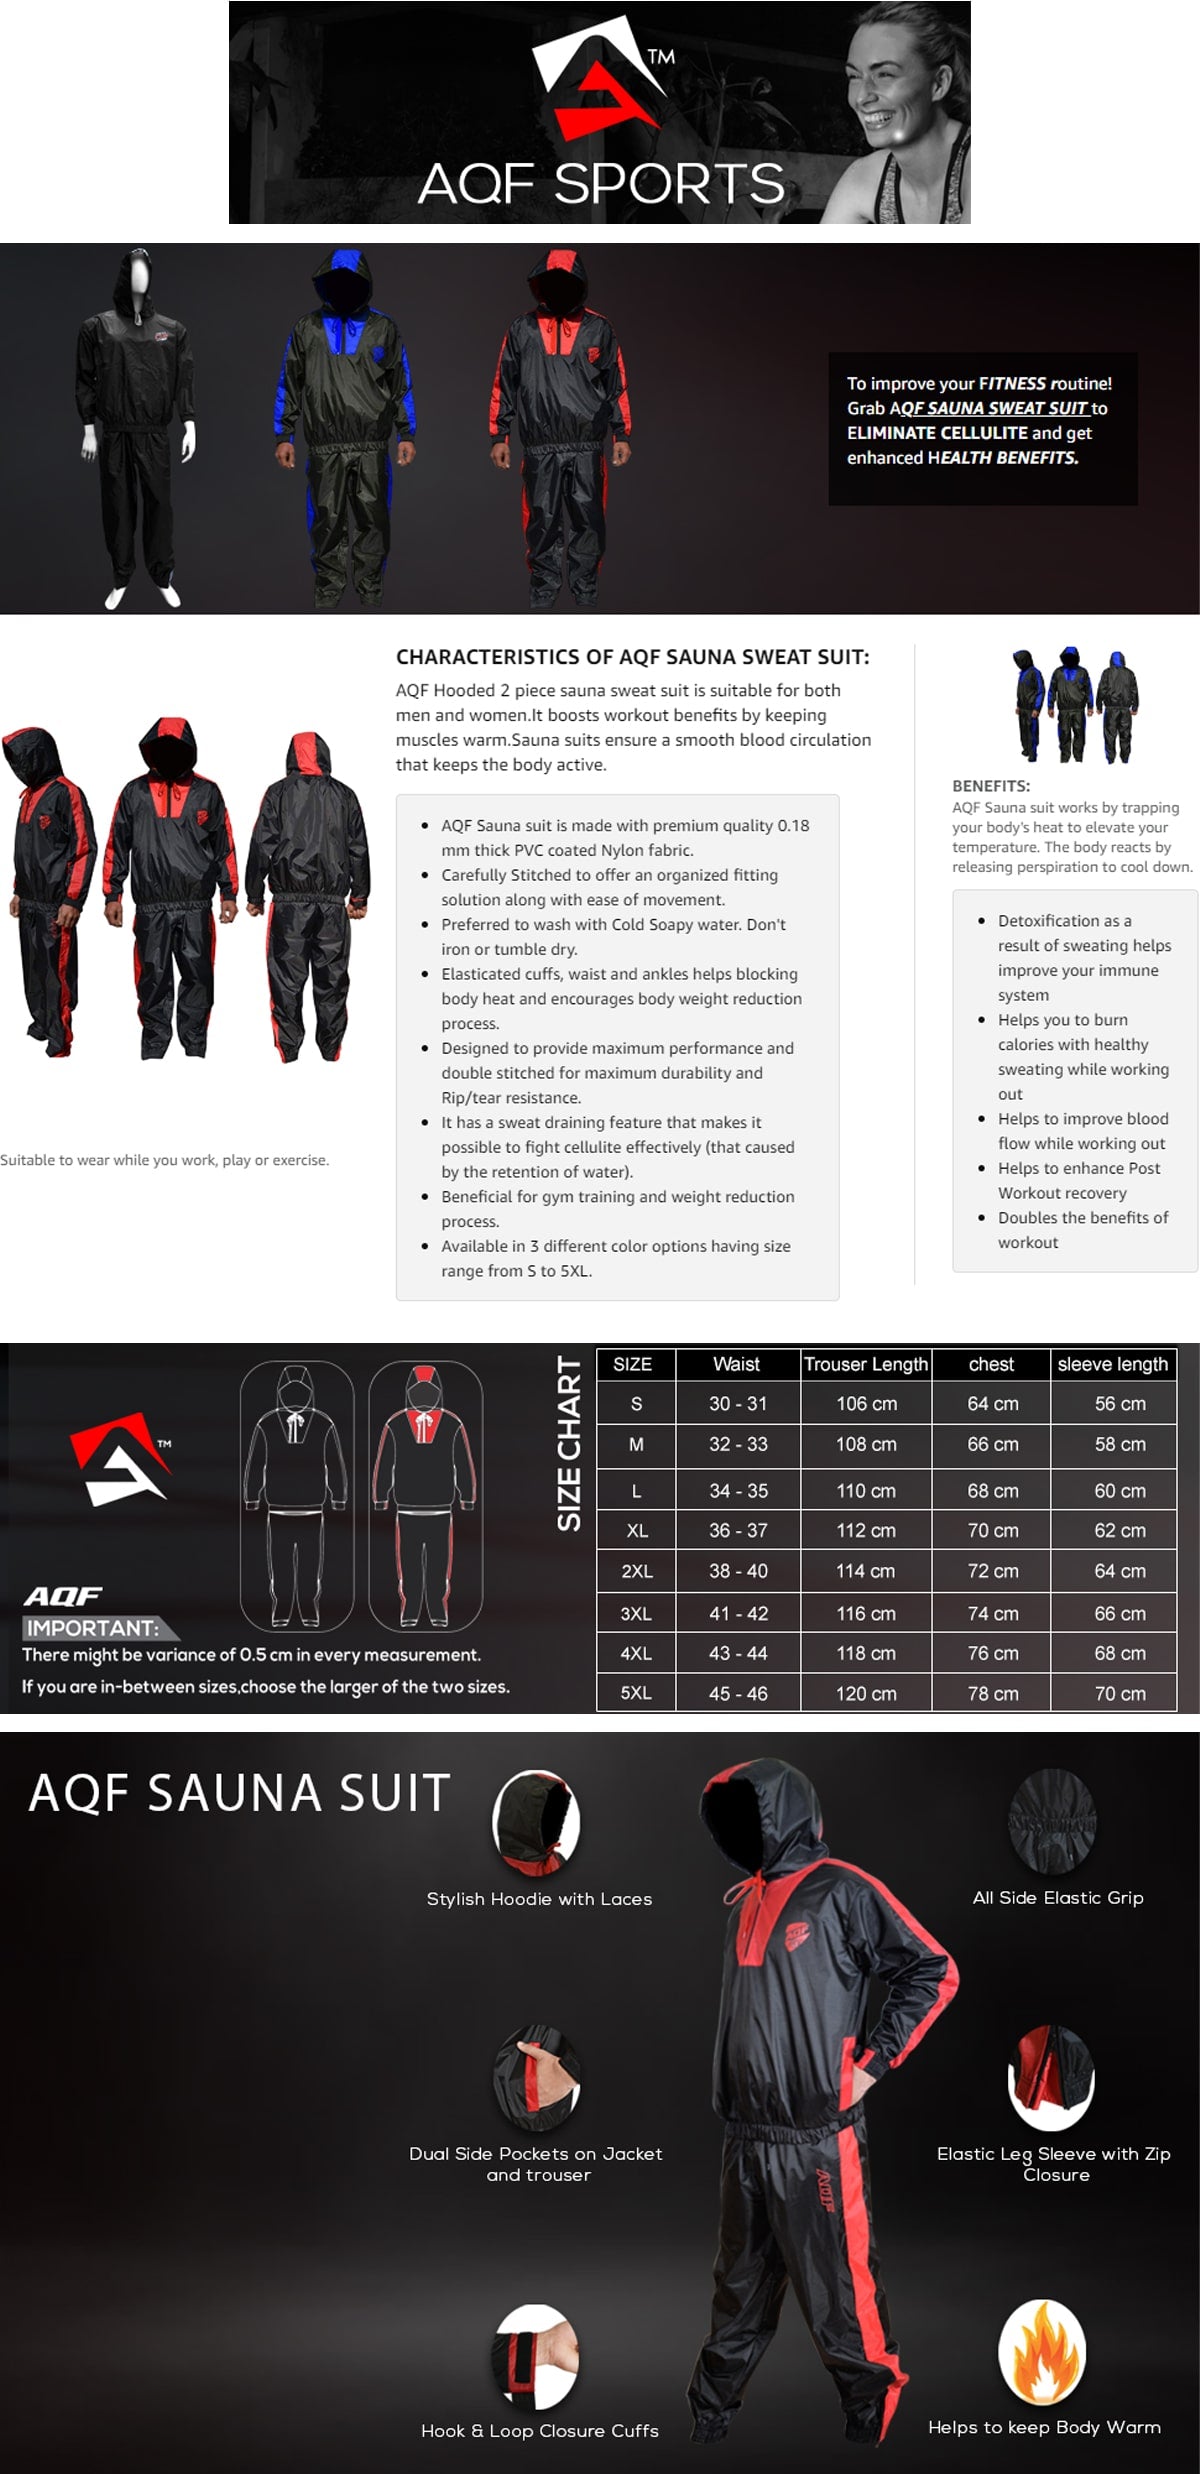 AQF Neoprene Sweat Sauna Suit in Black - Get Your Sweat On